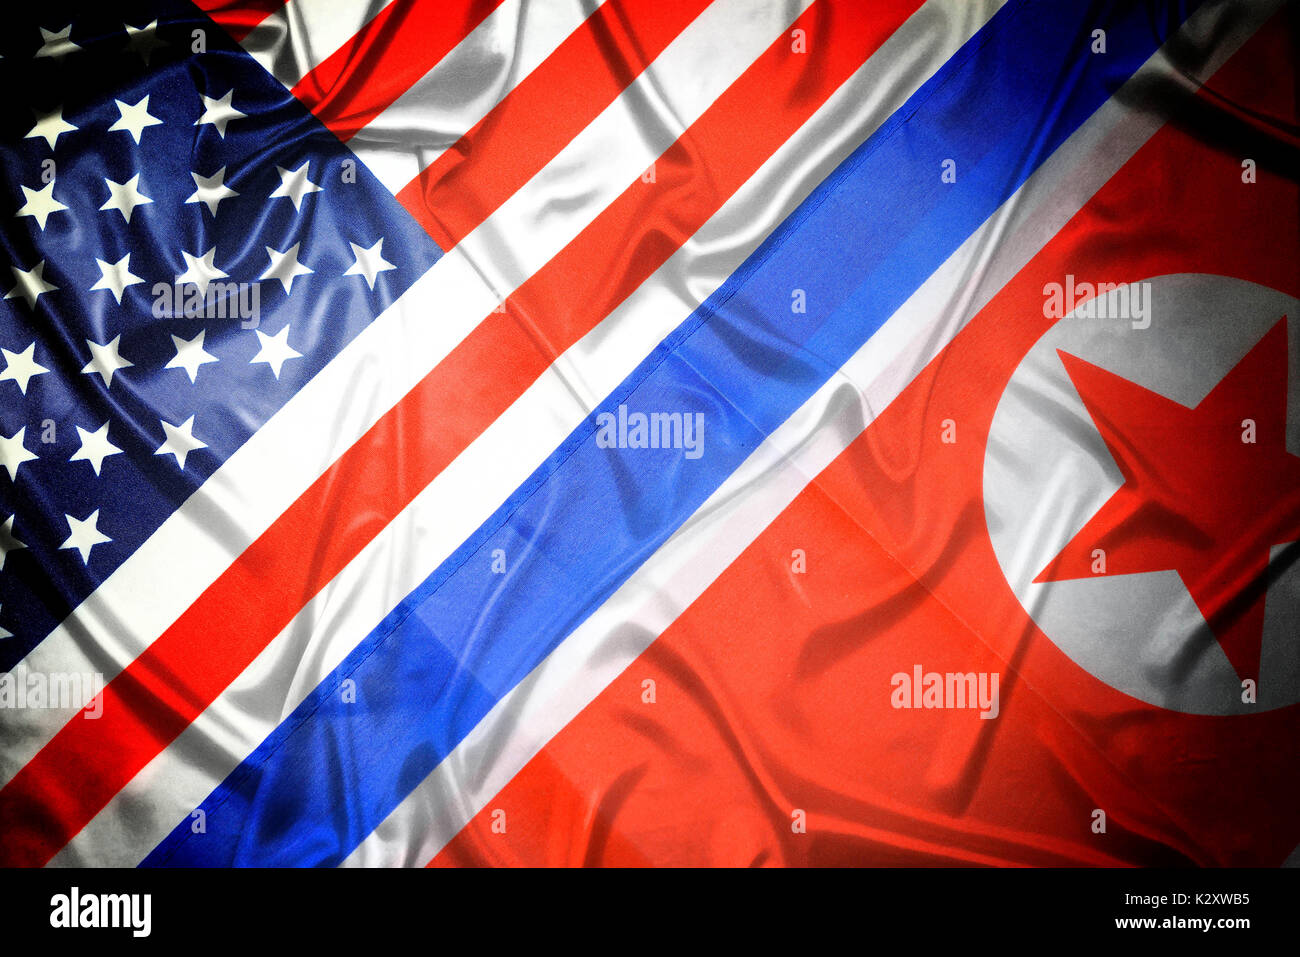 Flags of the USA and North Korea, Fahnen von den USA und Nordkorea Stock Photo